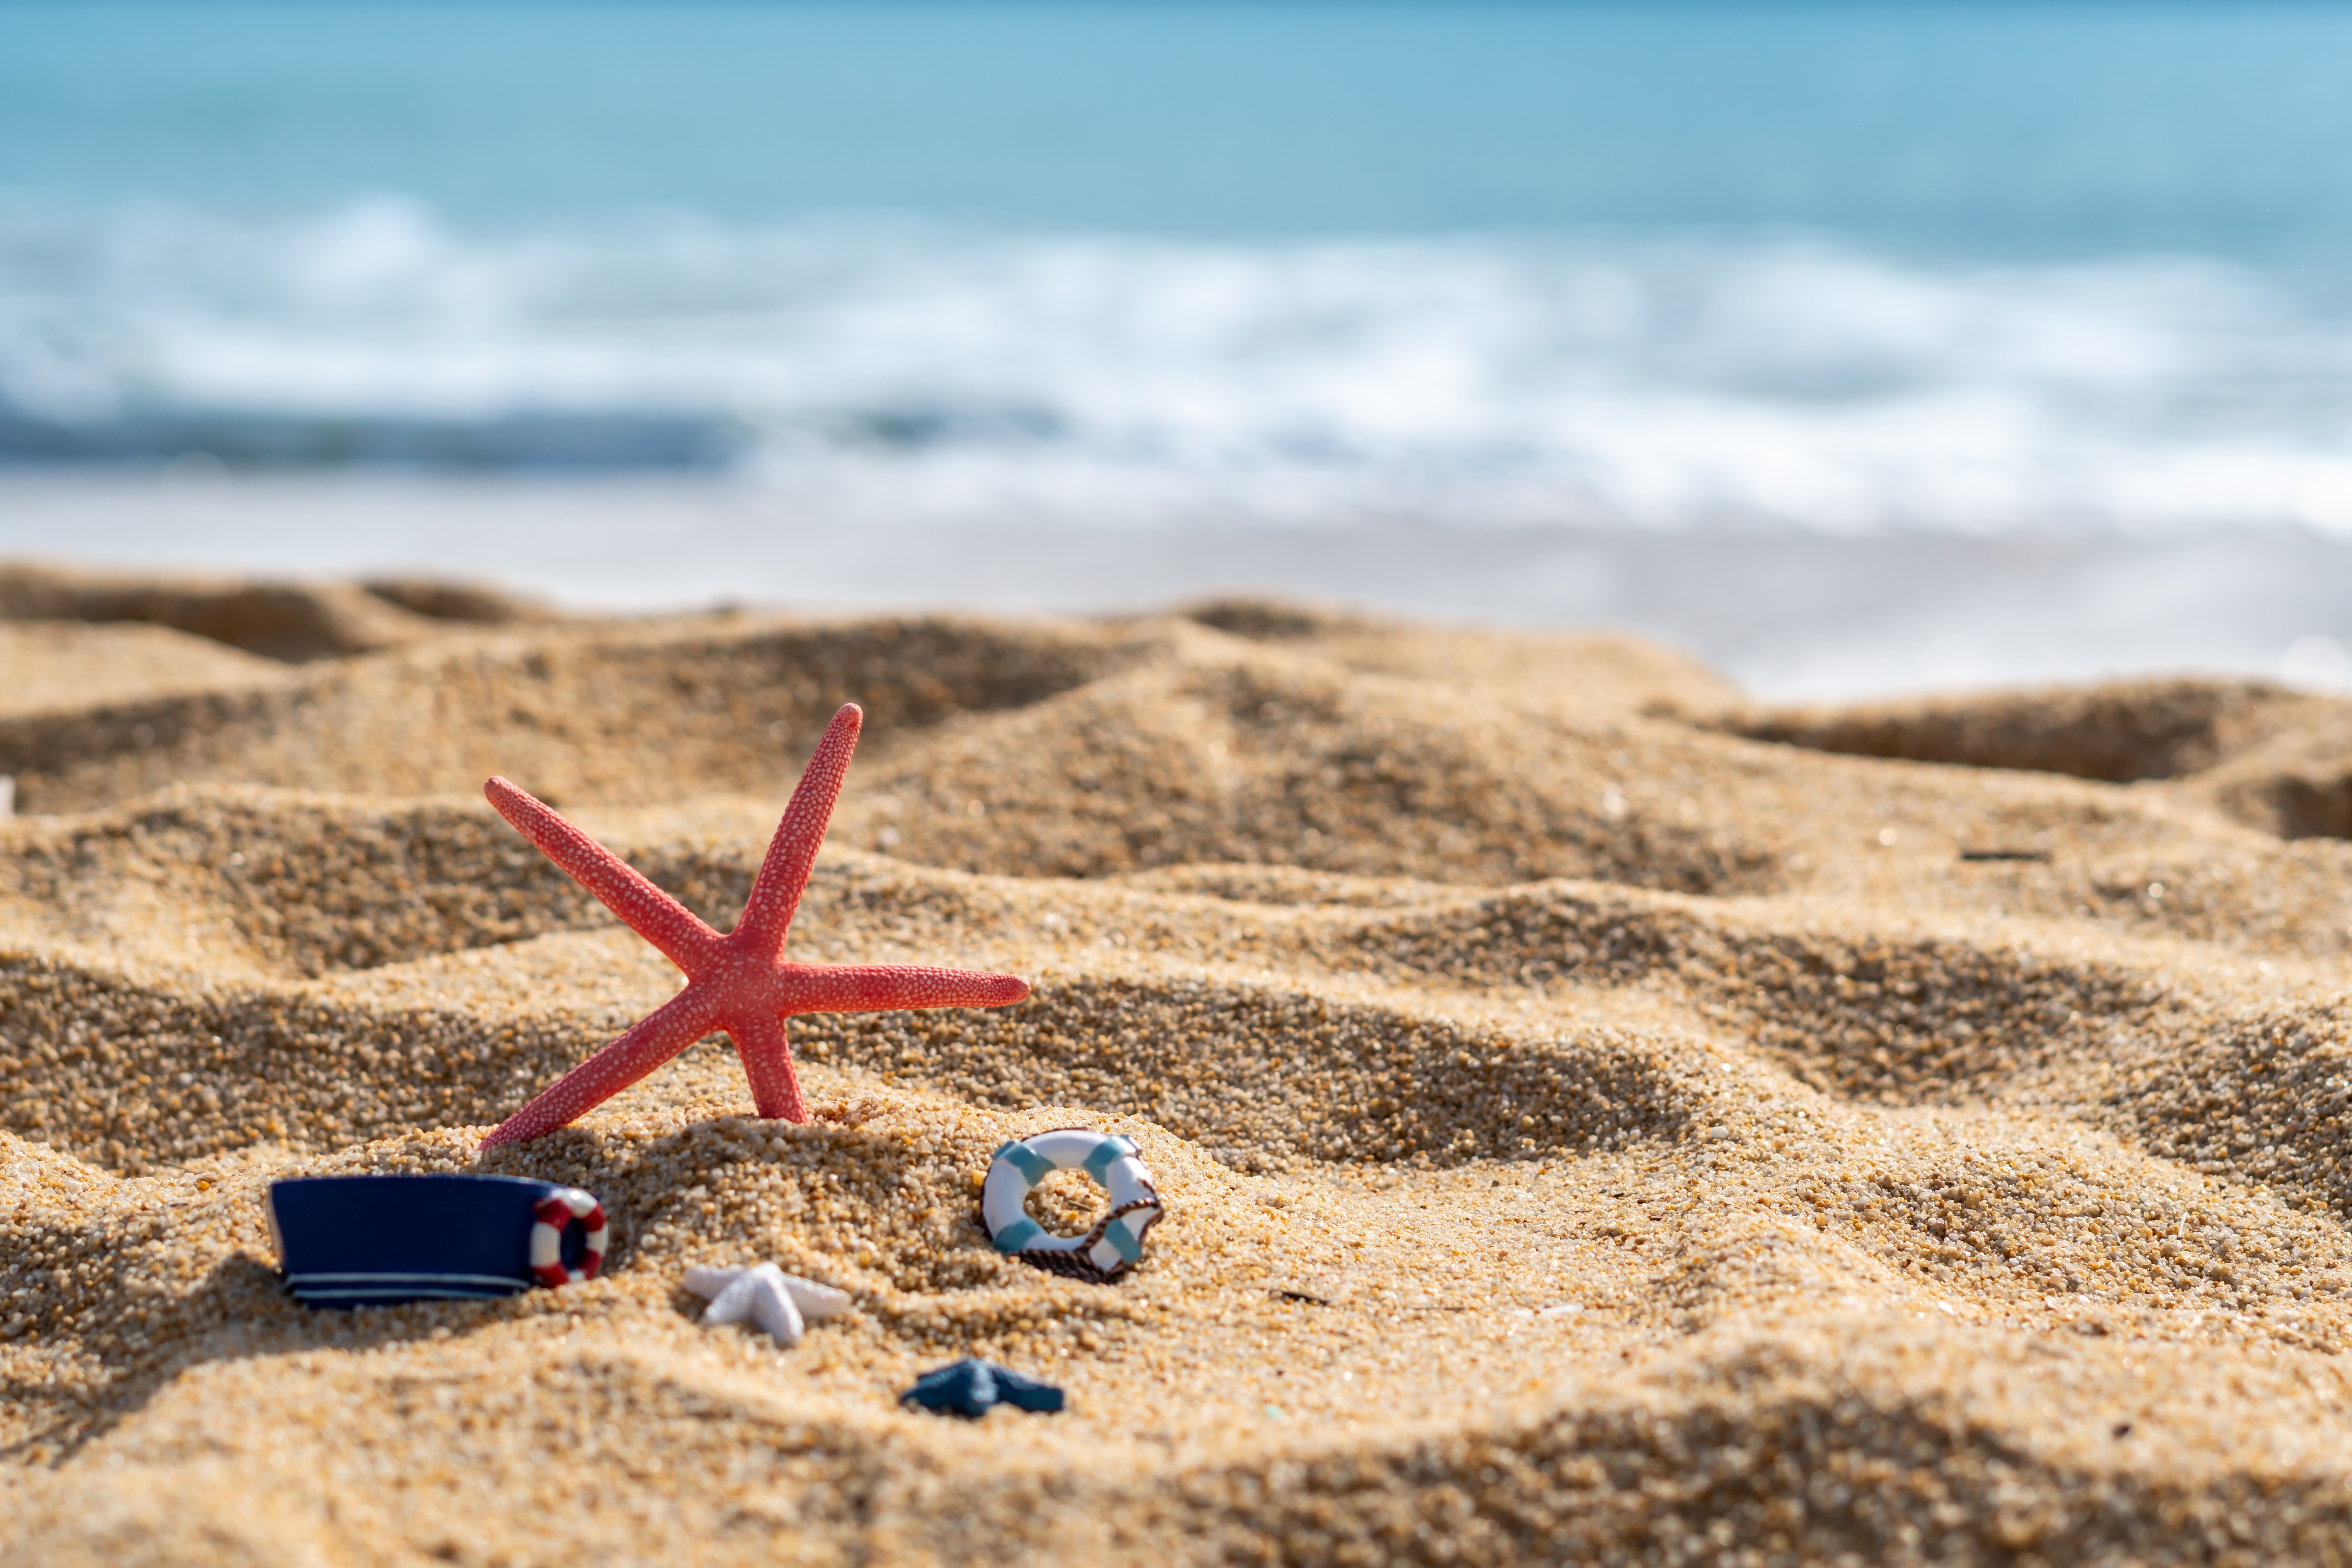 Zastaki.com - Красная морская звезда и игрушки на песке у моря летом